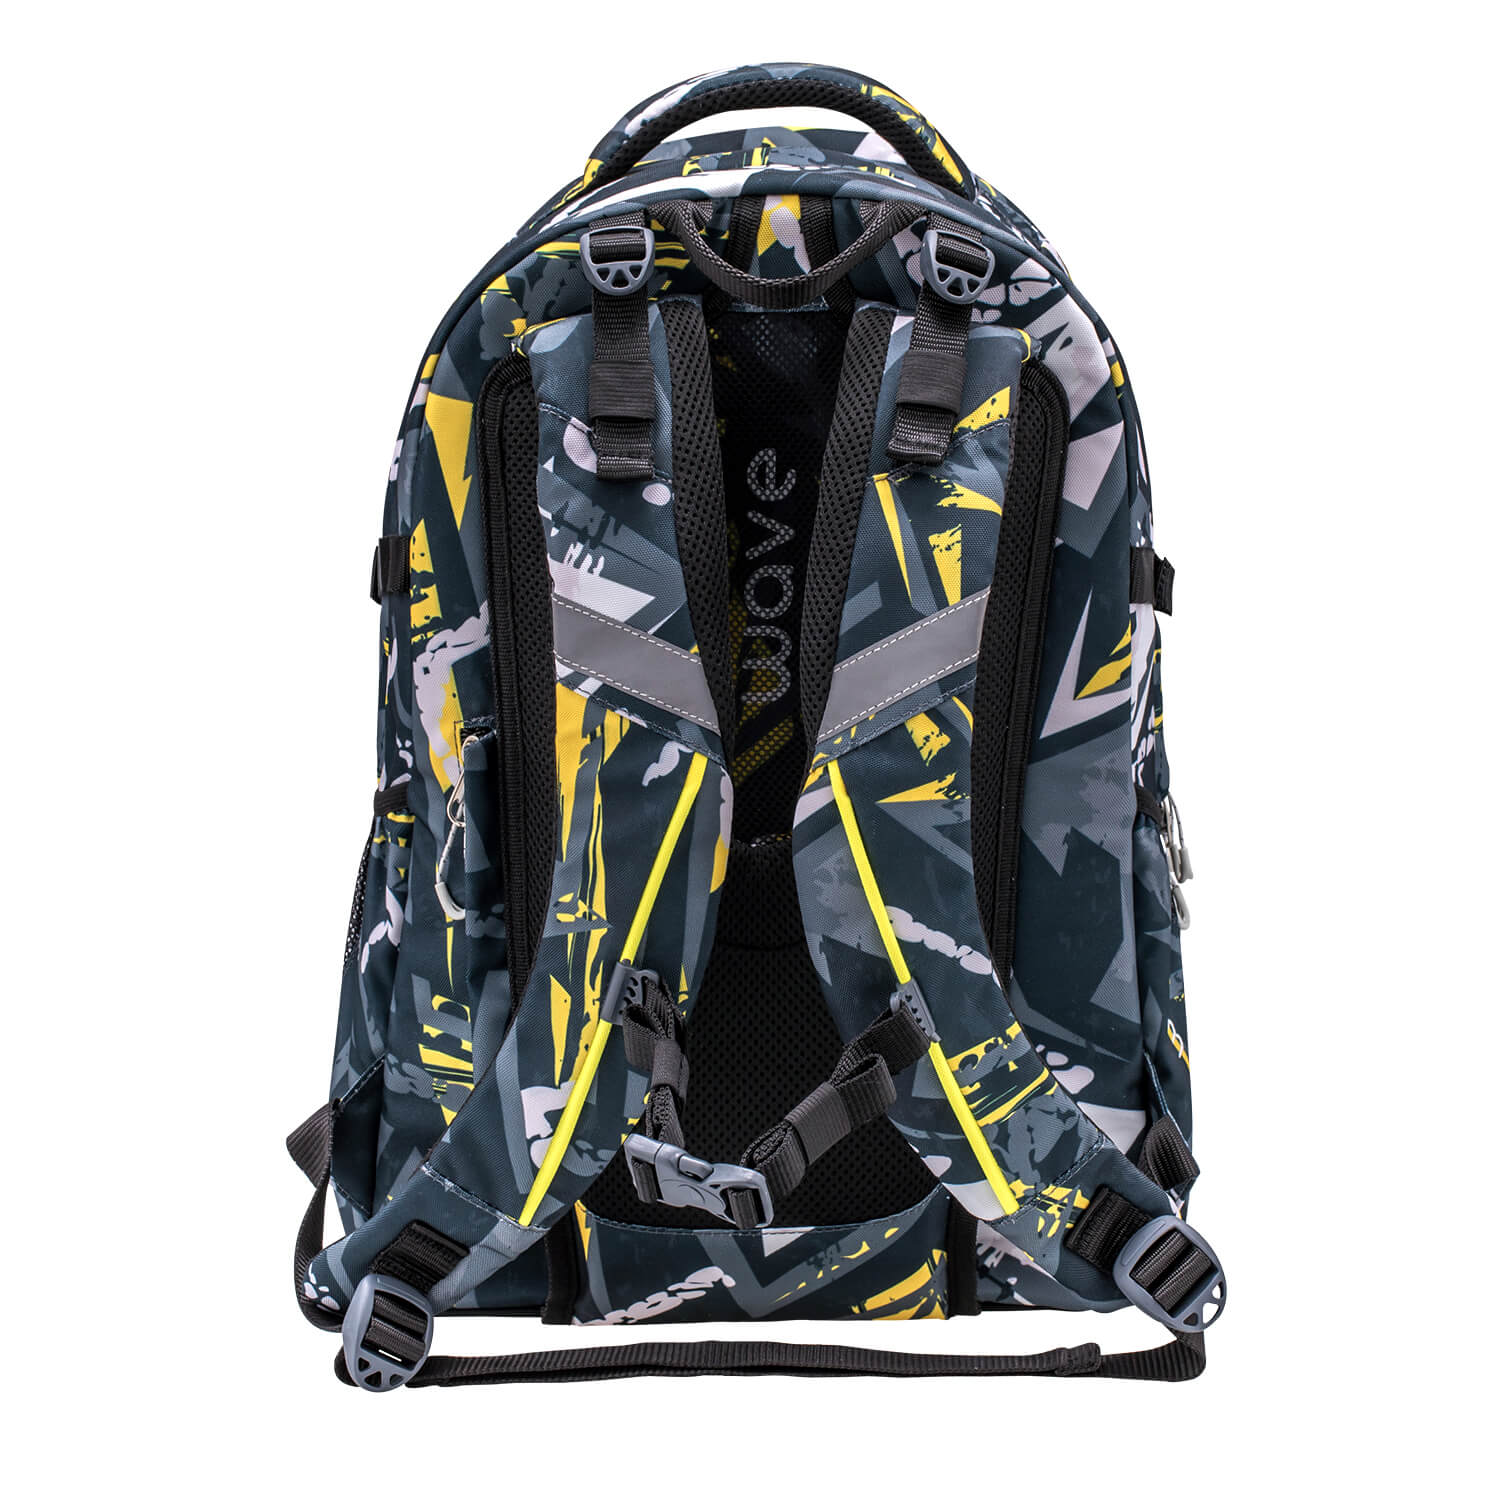 Wave Infinity Yellow Graffiti school backpack Set 3 Pcs